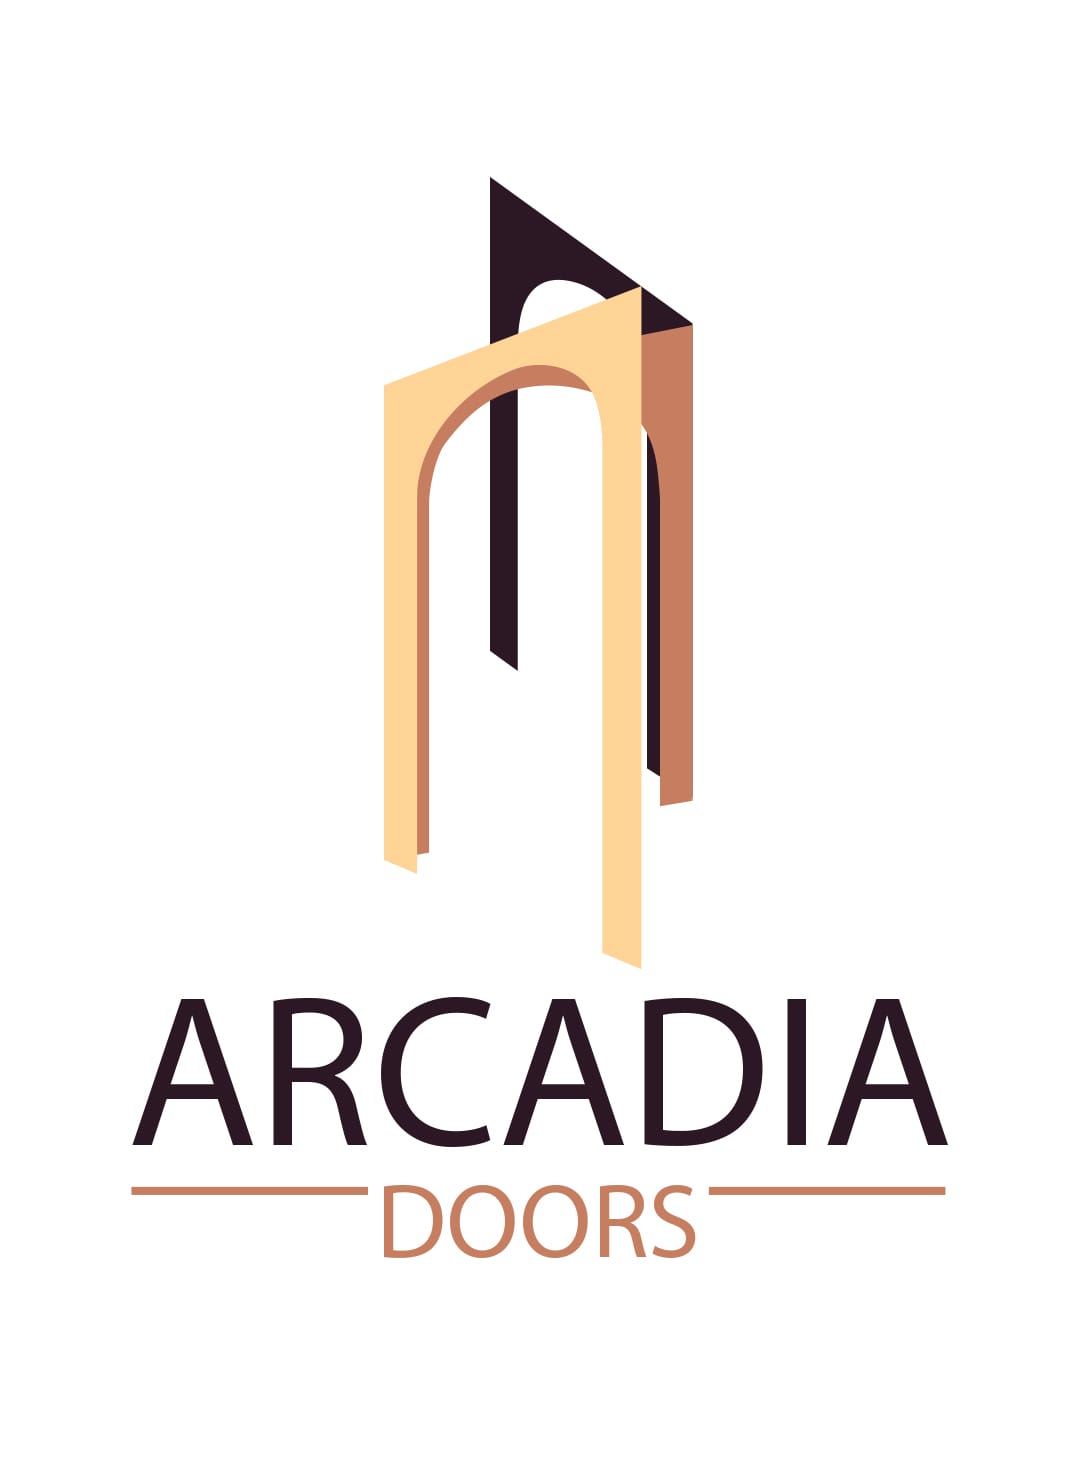 ARCADIA DOORS (ECO EURO DOORS S.R.L.)